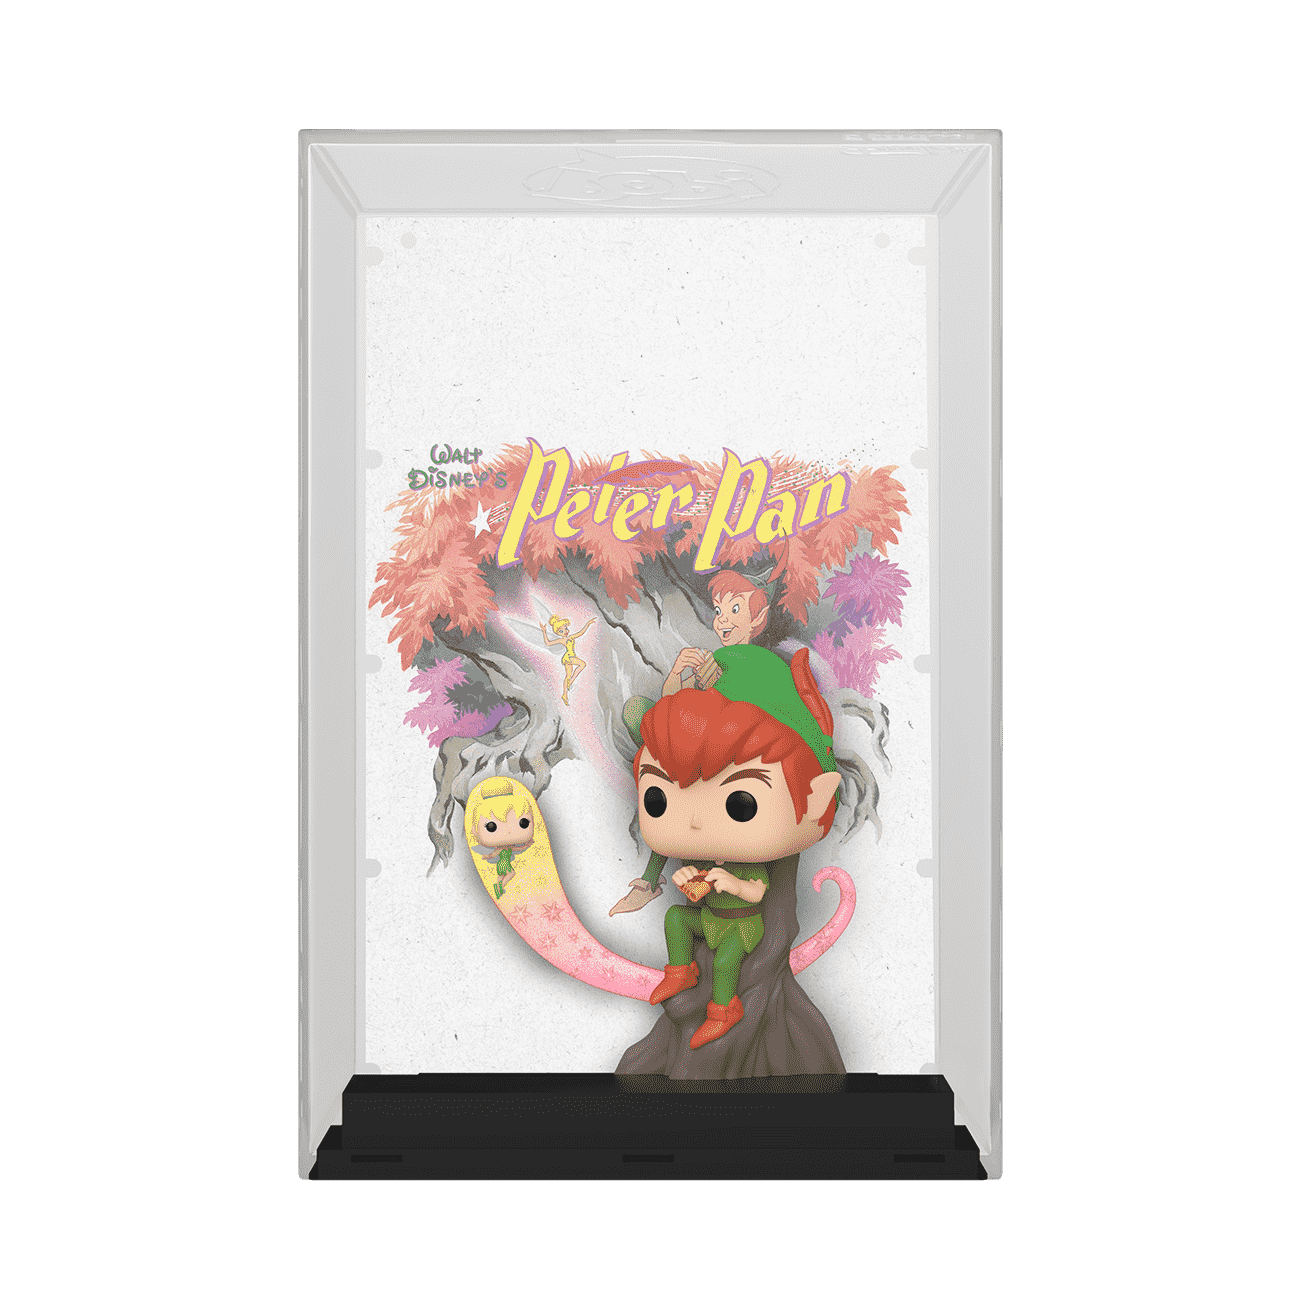 Disney Peter Pan Poster3 3d Hoodie With Mask - Tiniwo